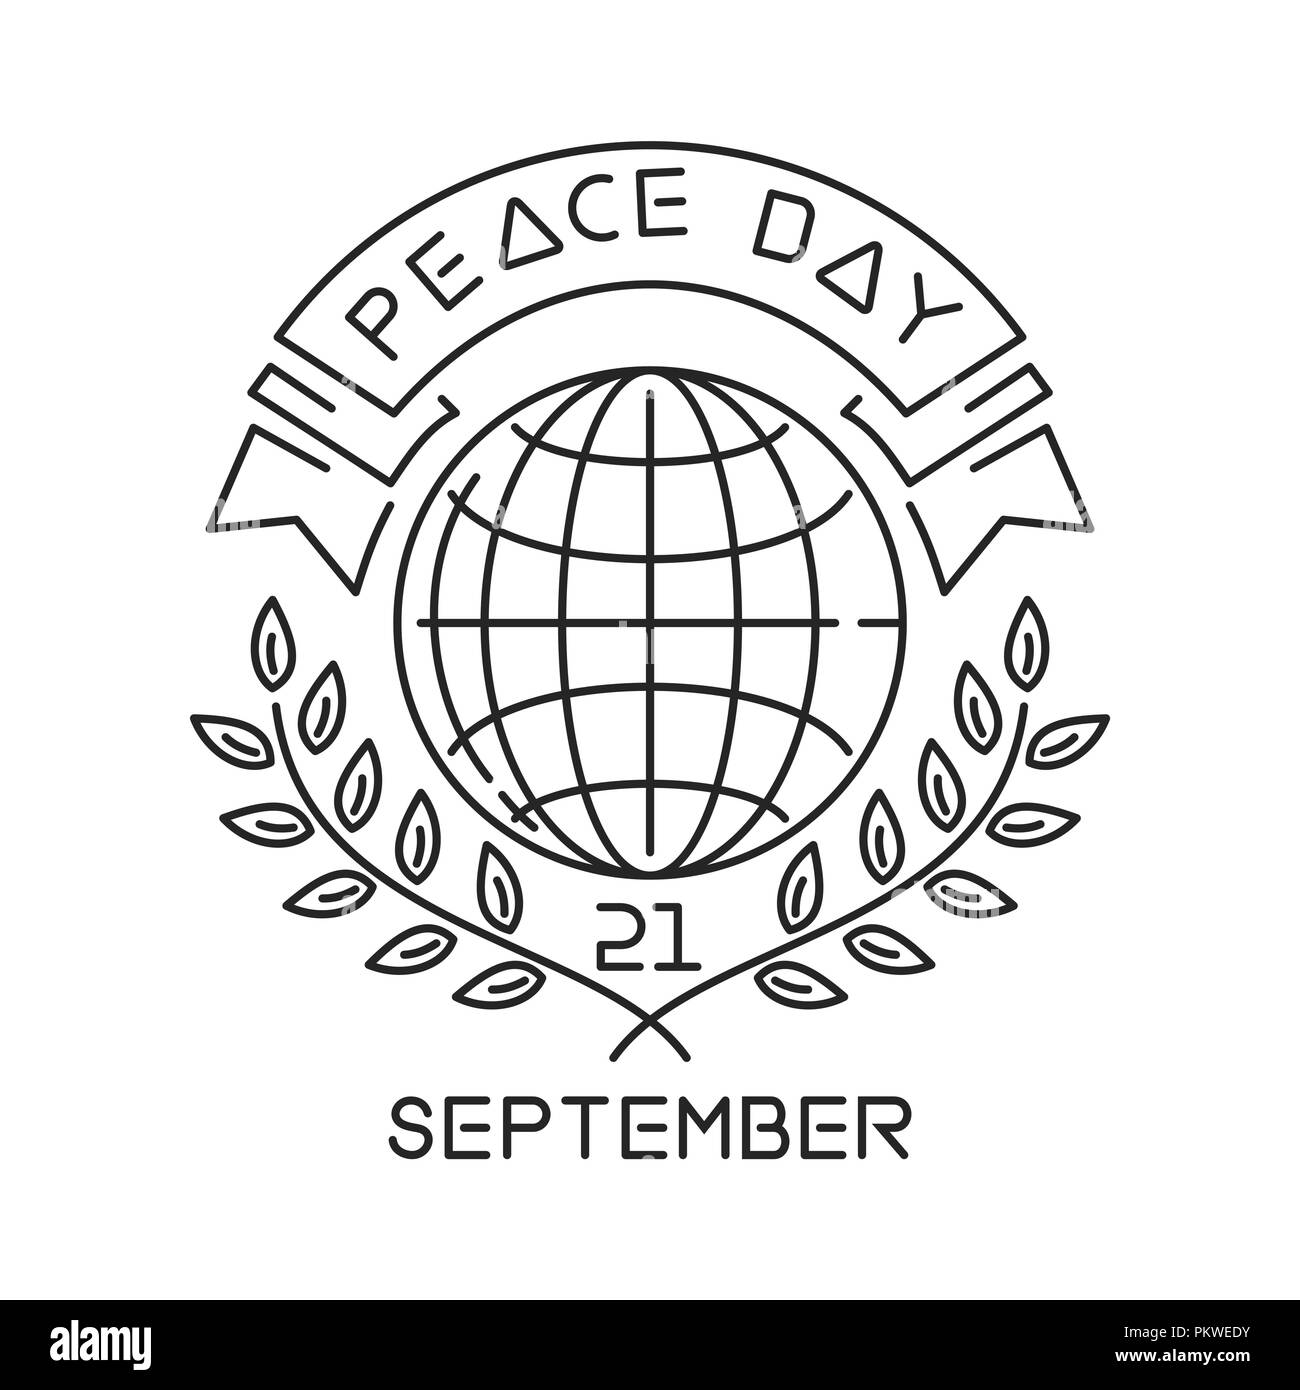 Peace Day line logo design. International Day of Peace. September 21